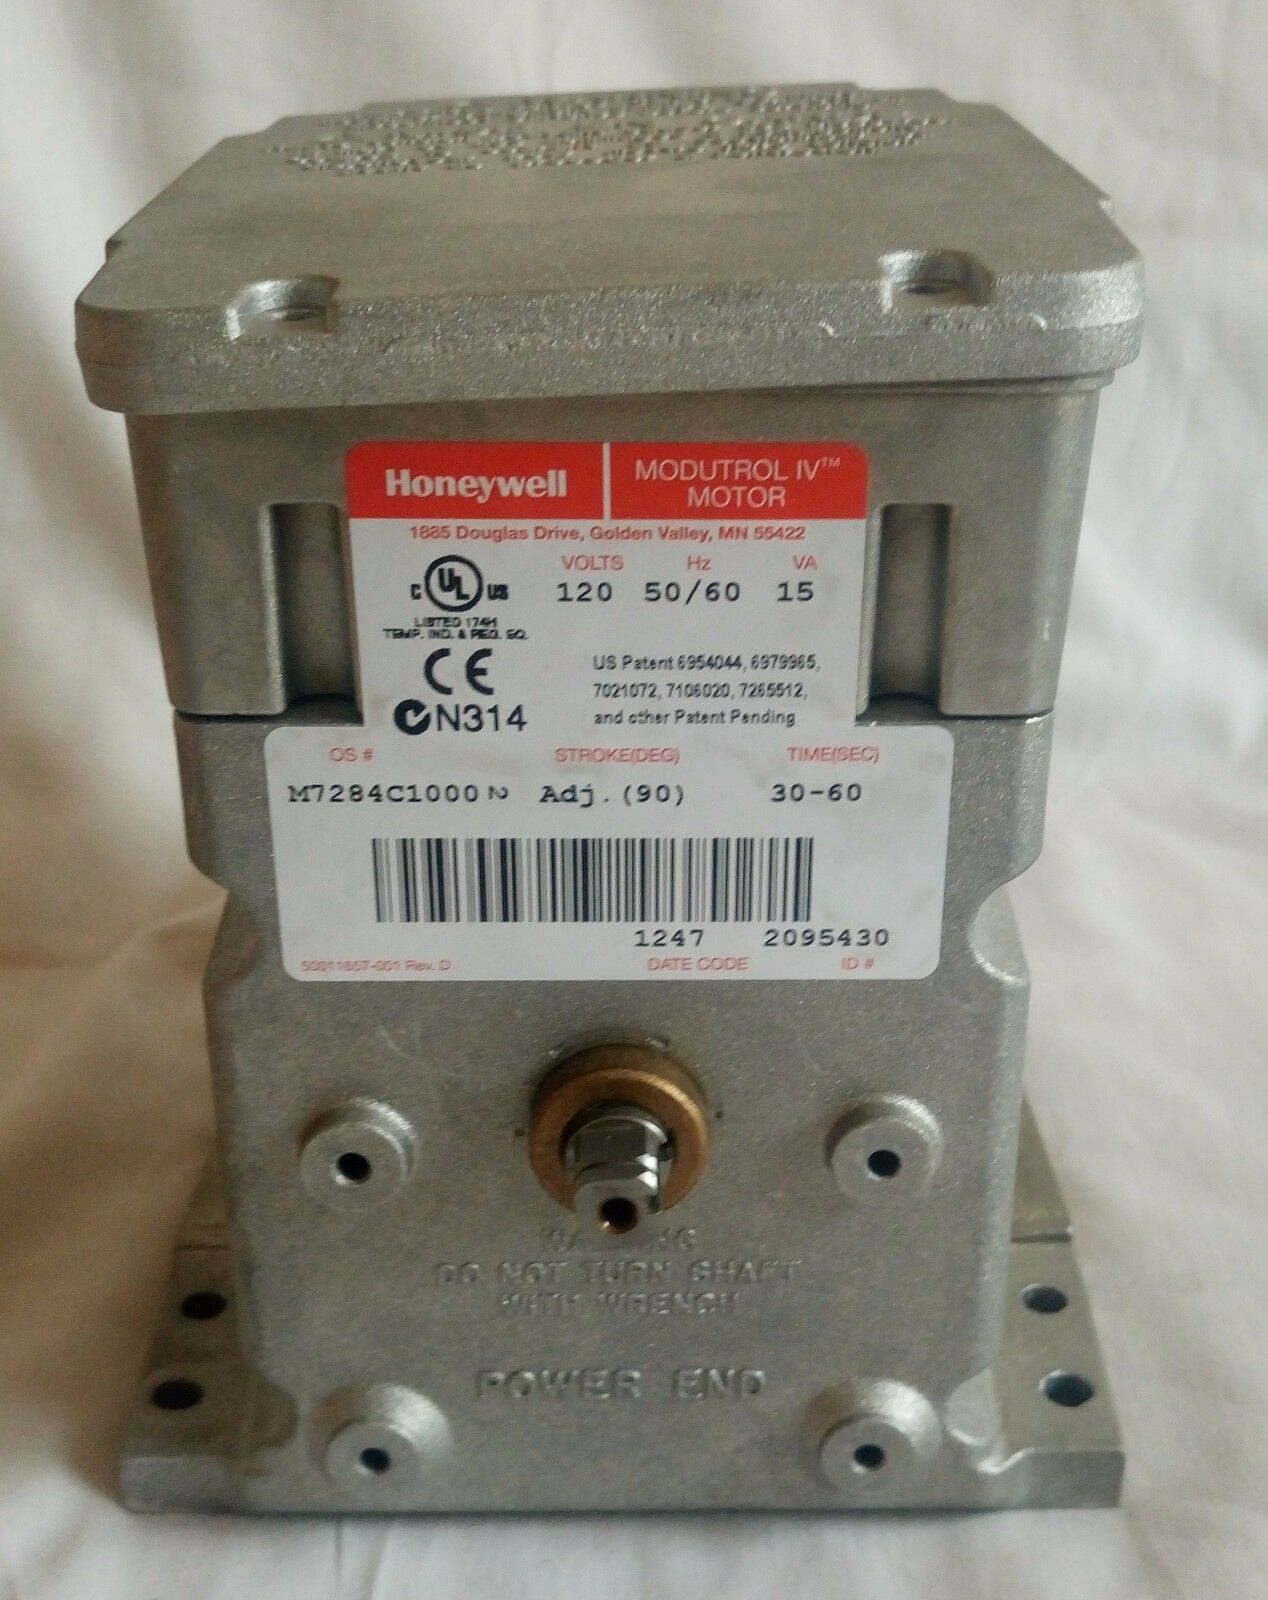 Honeywell m7284c1000 120v 15va 非弹簧复位 modiv 电机 